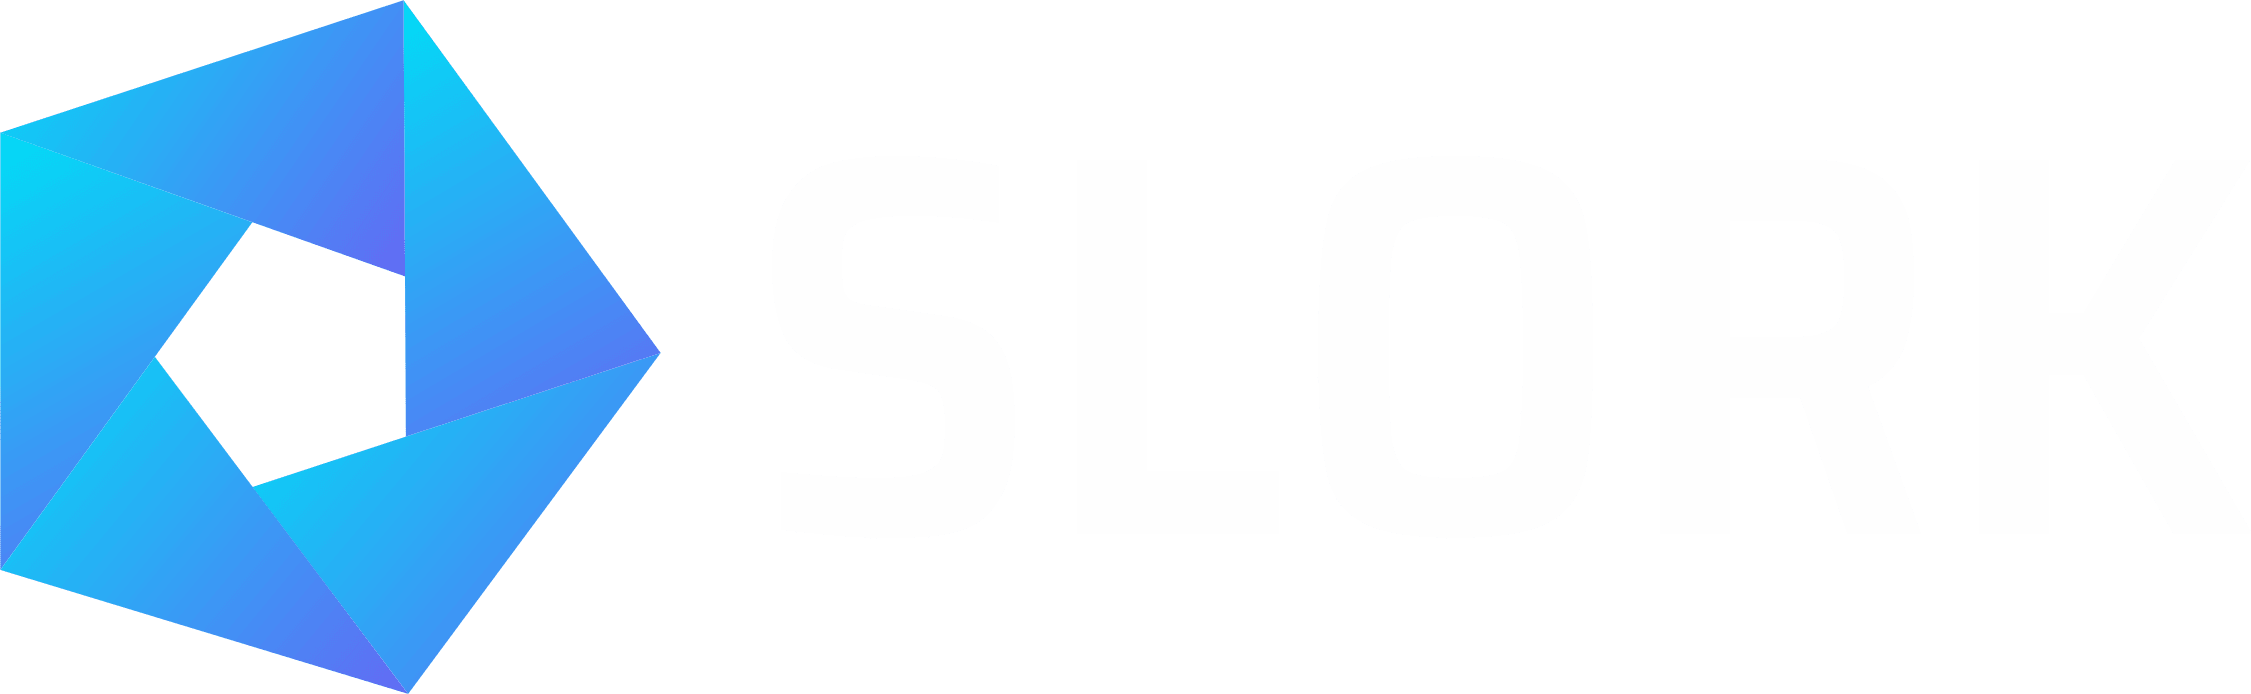 Slork White Logo